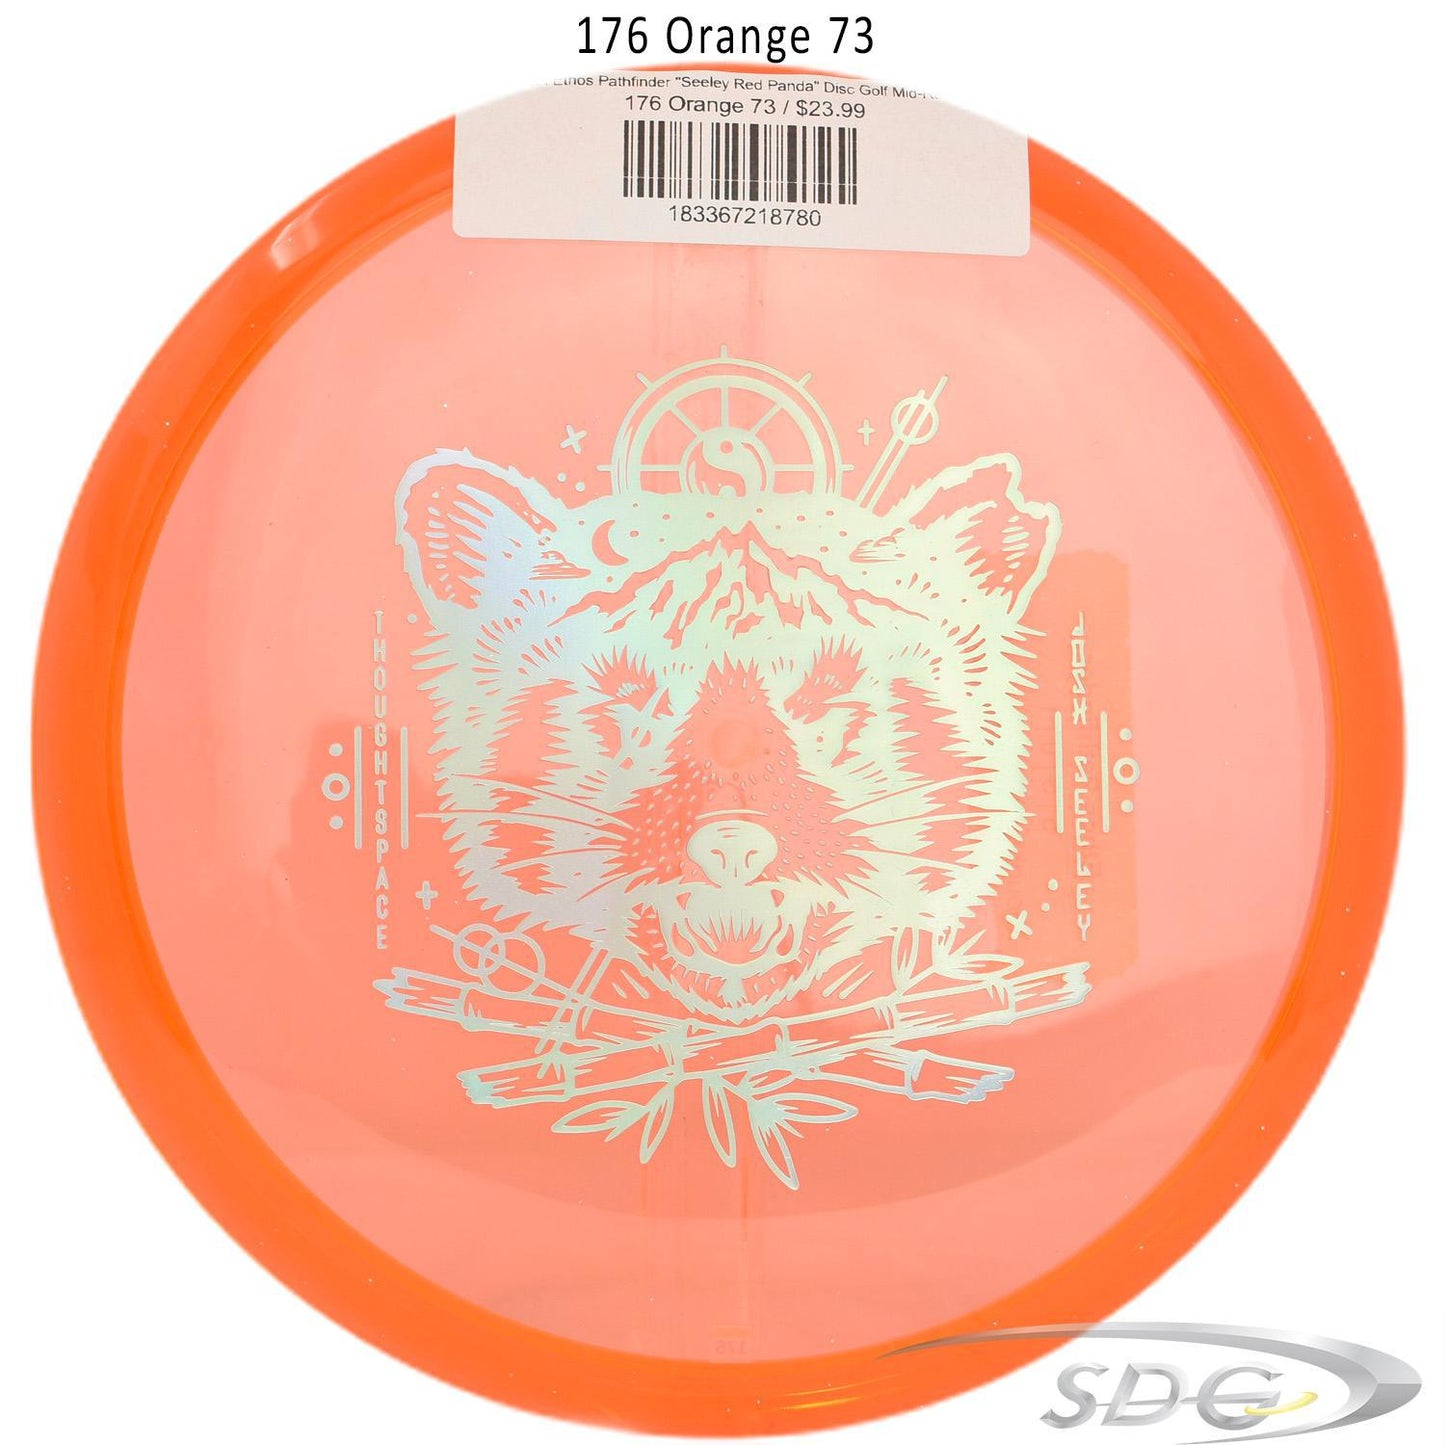 tsa-ethos-pathfinder-seeley-red-panda-disc-golf-mid-range 176 Orange 73 